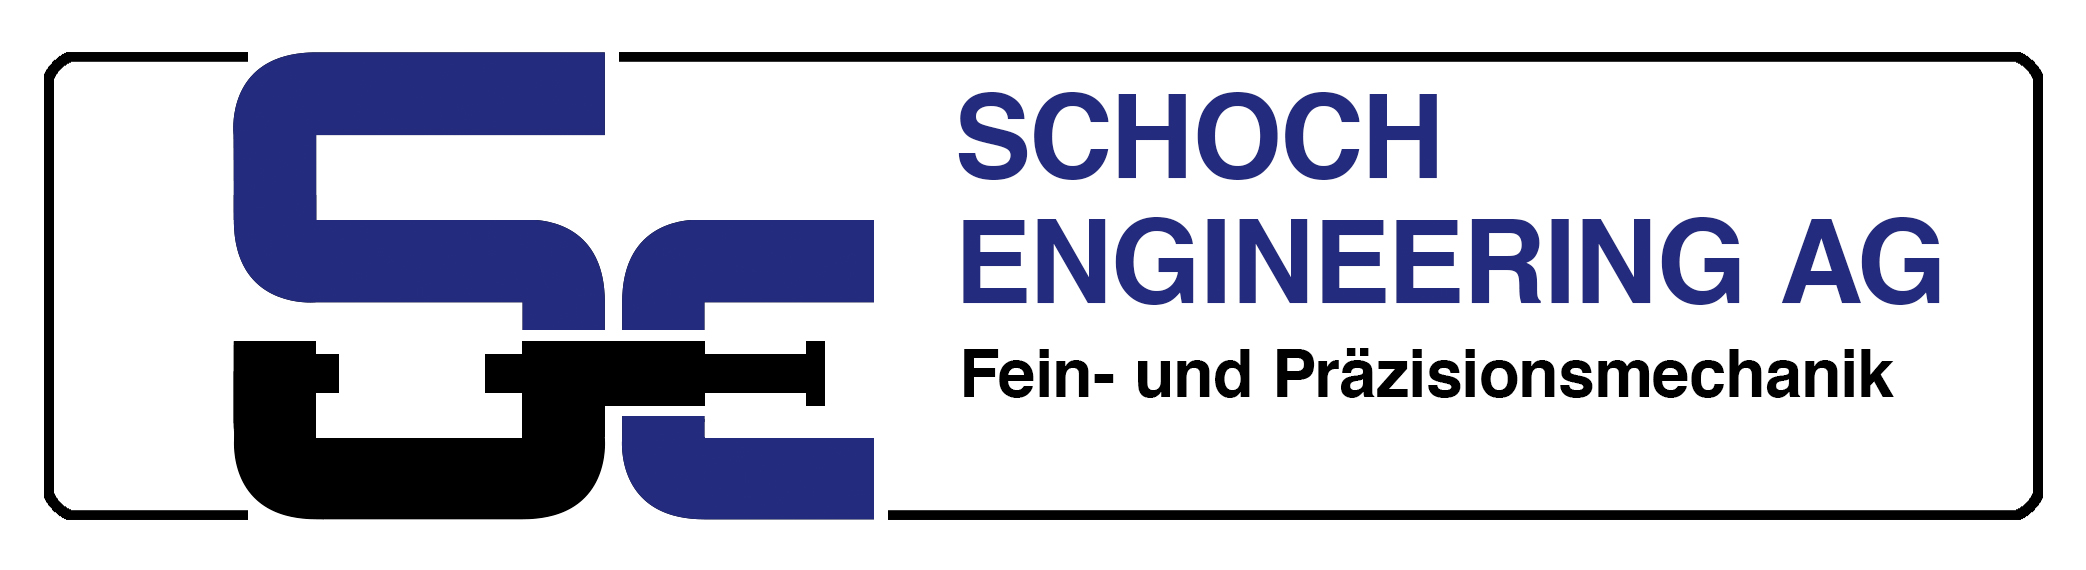 Schoch Engineering AG - Logo